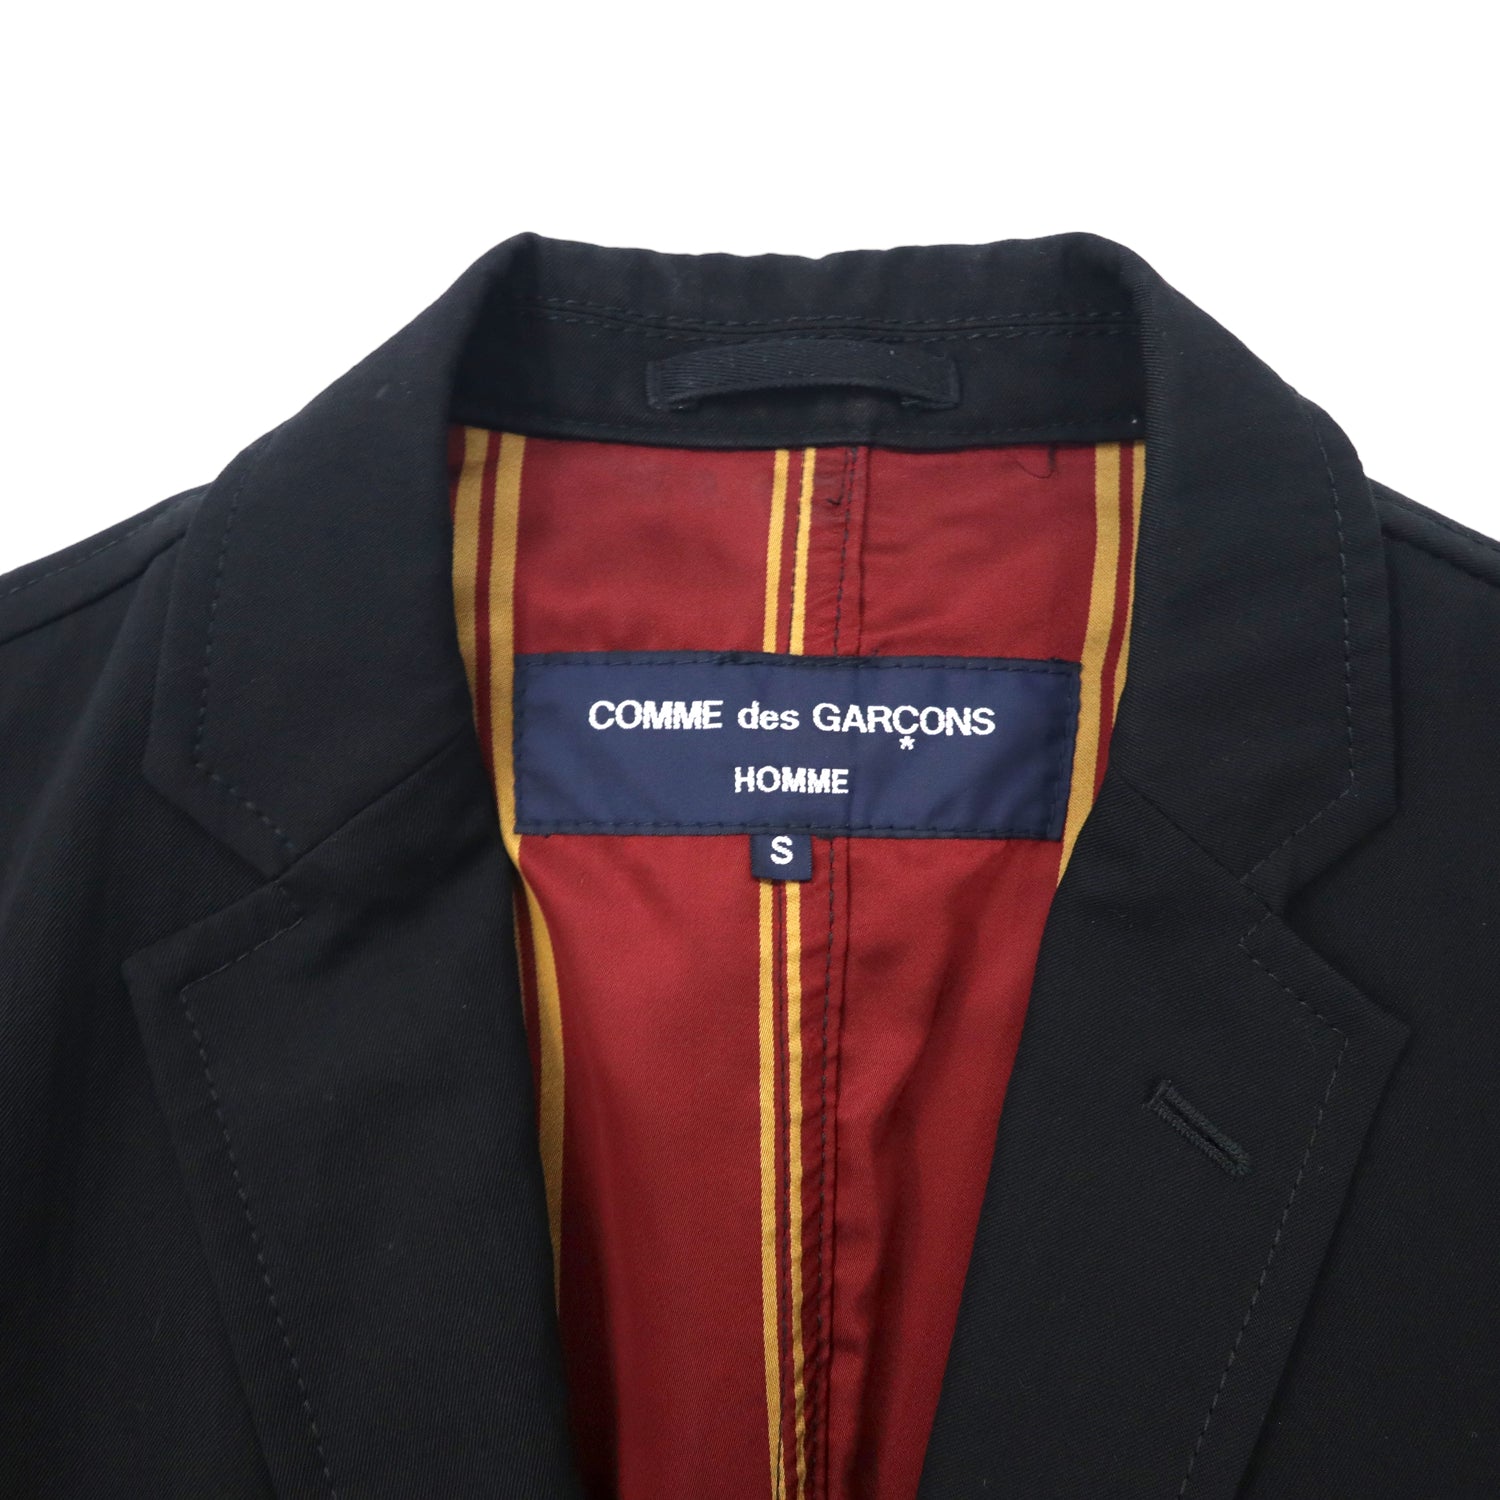 COMME des GARCONS HOMME 2b Tailored Jacket S Black Wool HR-J022 Japan MADE